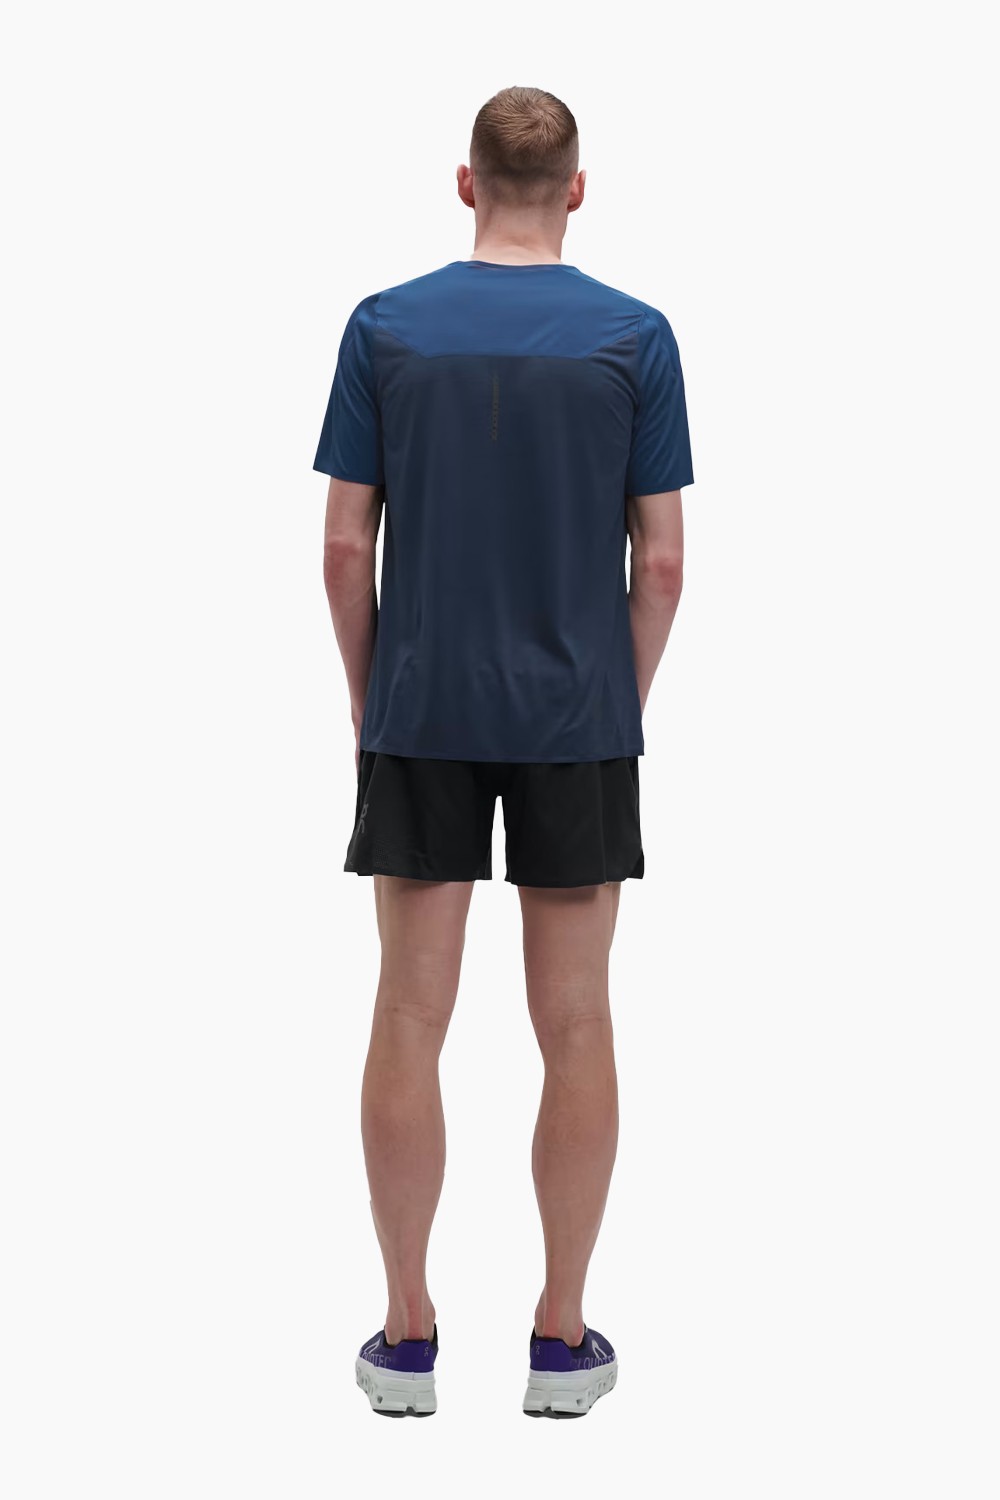 ON | Men's 5" Lightweight Shorts in Black